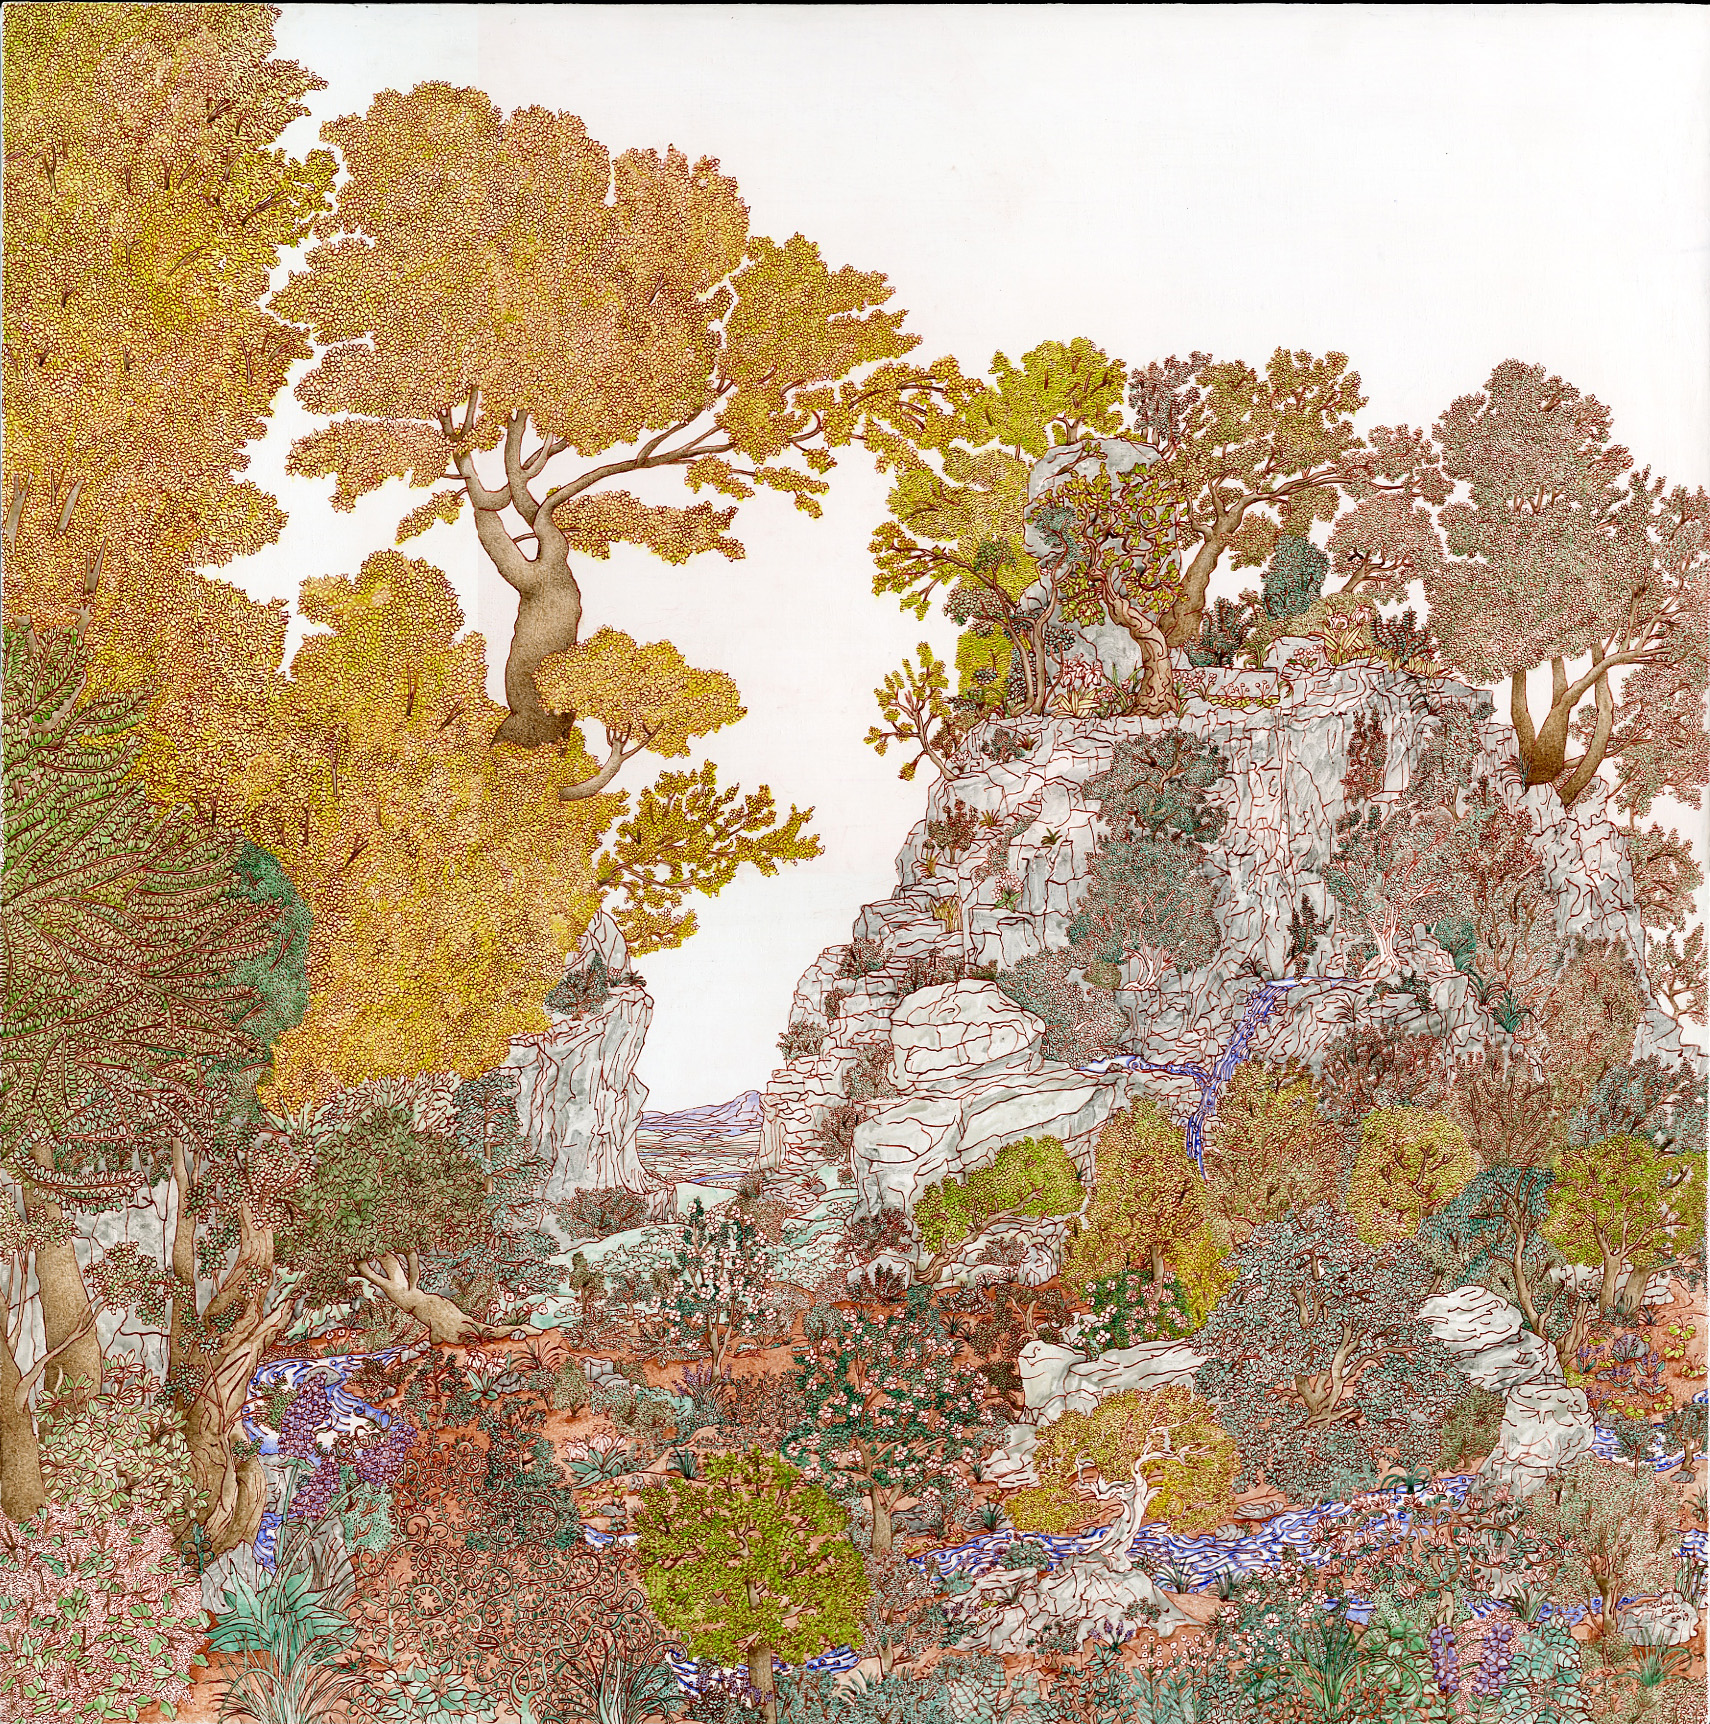  Micheal Eade,  Mount Tabor 塔博尔山， Egg tempera on wood panel, 24 x 23。75 in. (61 x 60.3cm), 2019. 